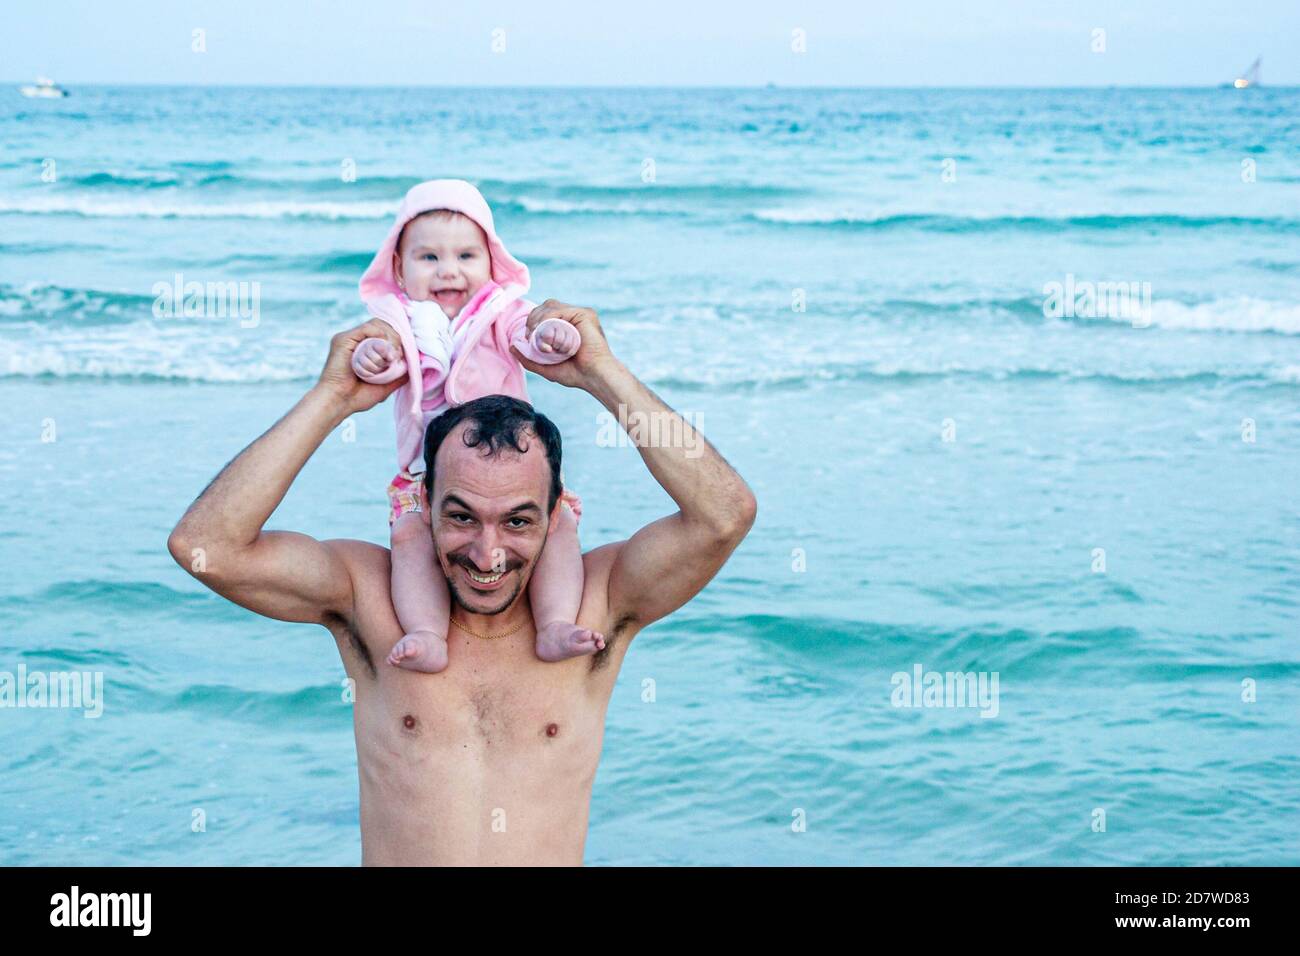 Miami Beach Florida,Atlantic Ocean seashore,Hispanic man father baby shoulders water, Stock Photo